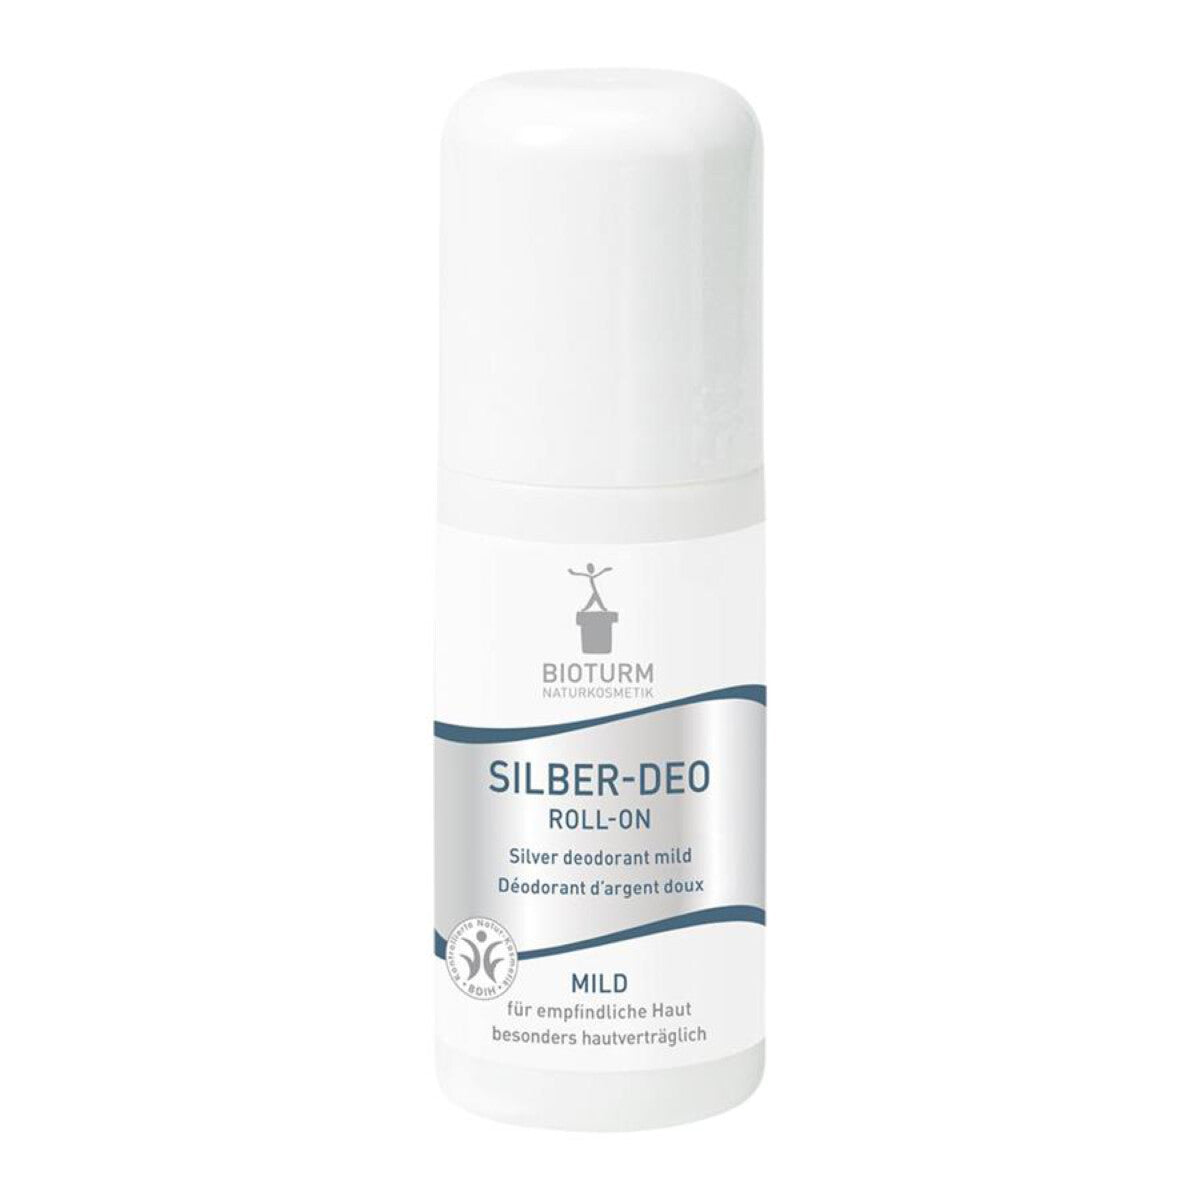 BIOTURM Silber-Deo mild - 50 ml